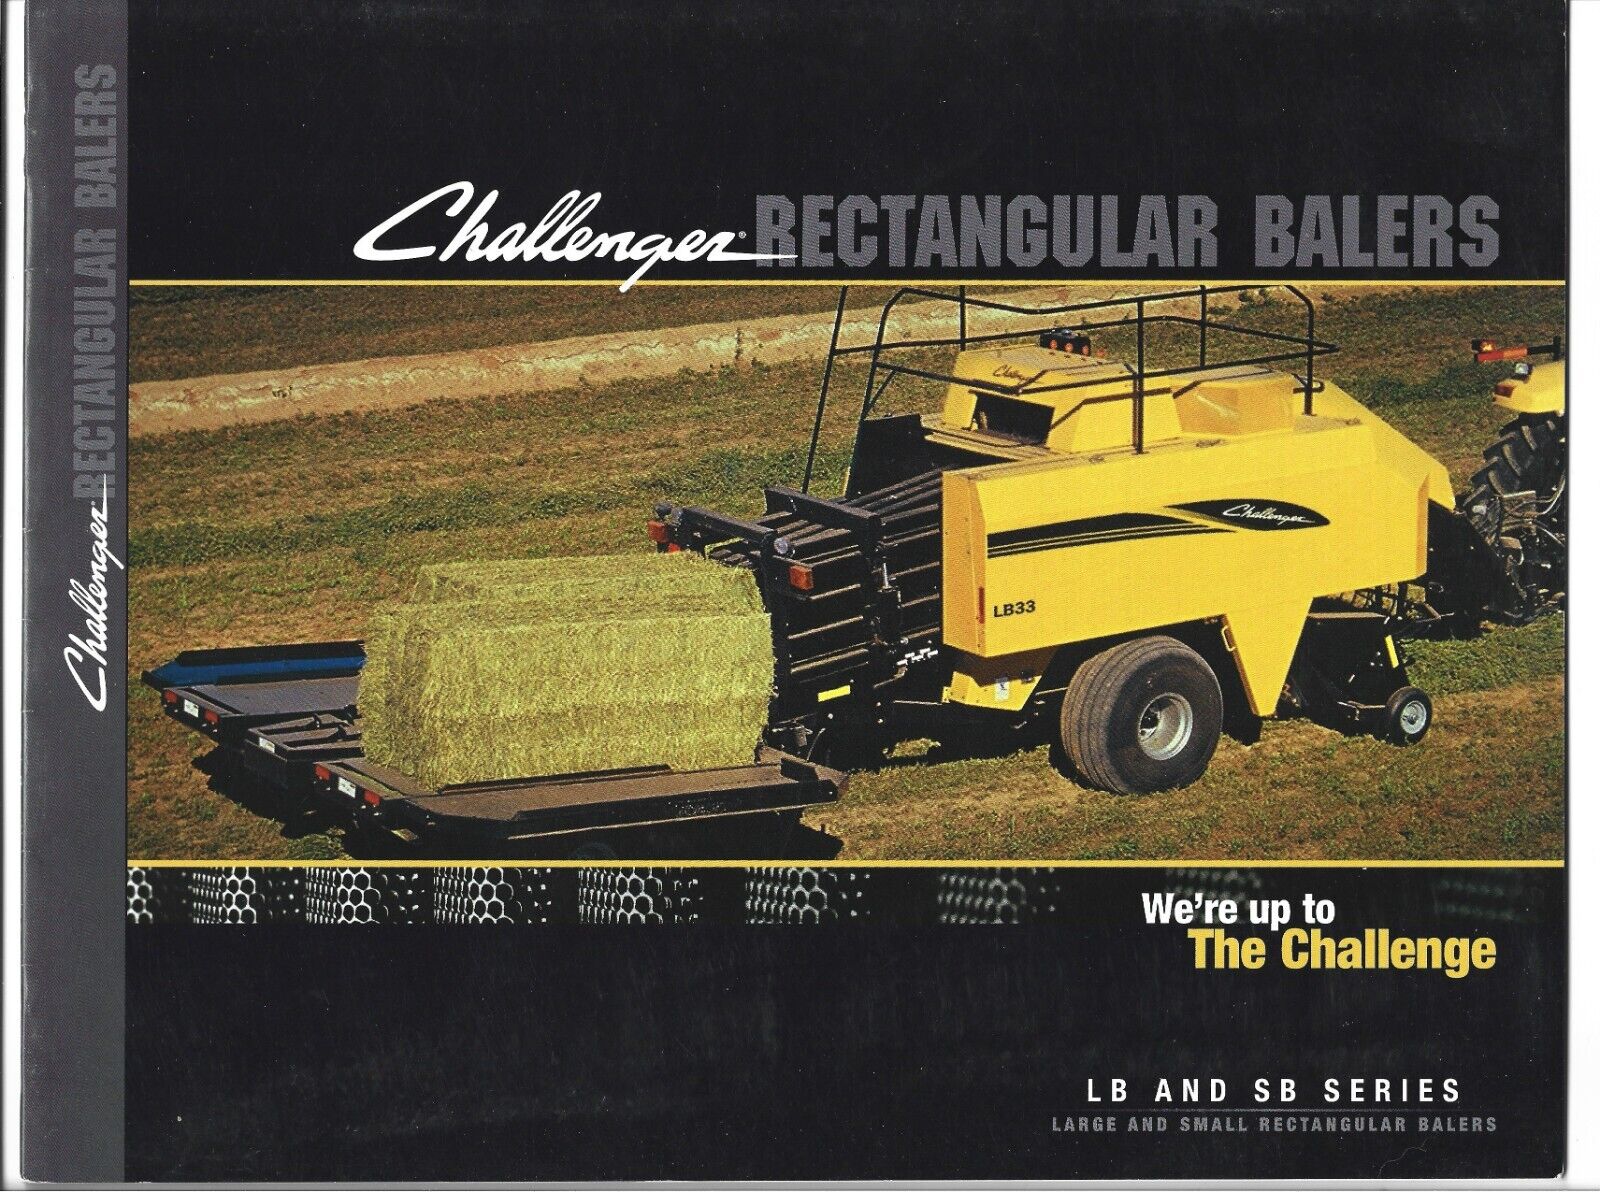 Original Challenger LB and SB Series Rectangular Balers Sales Brochure # 13445